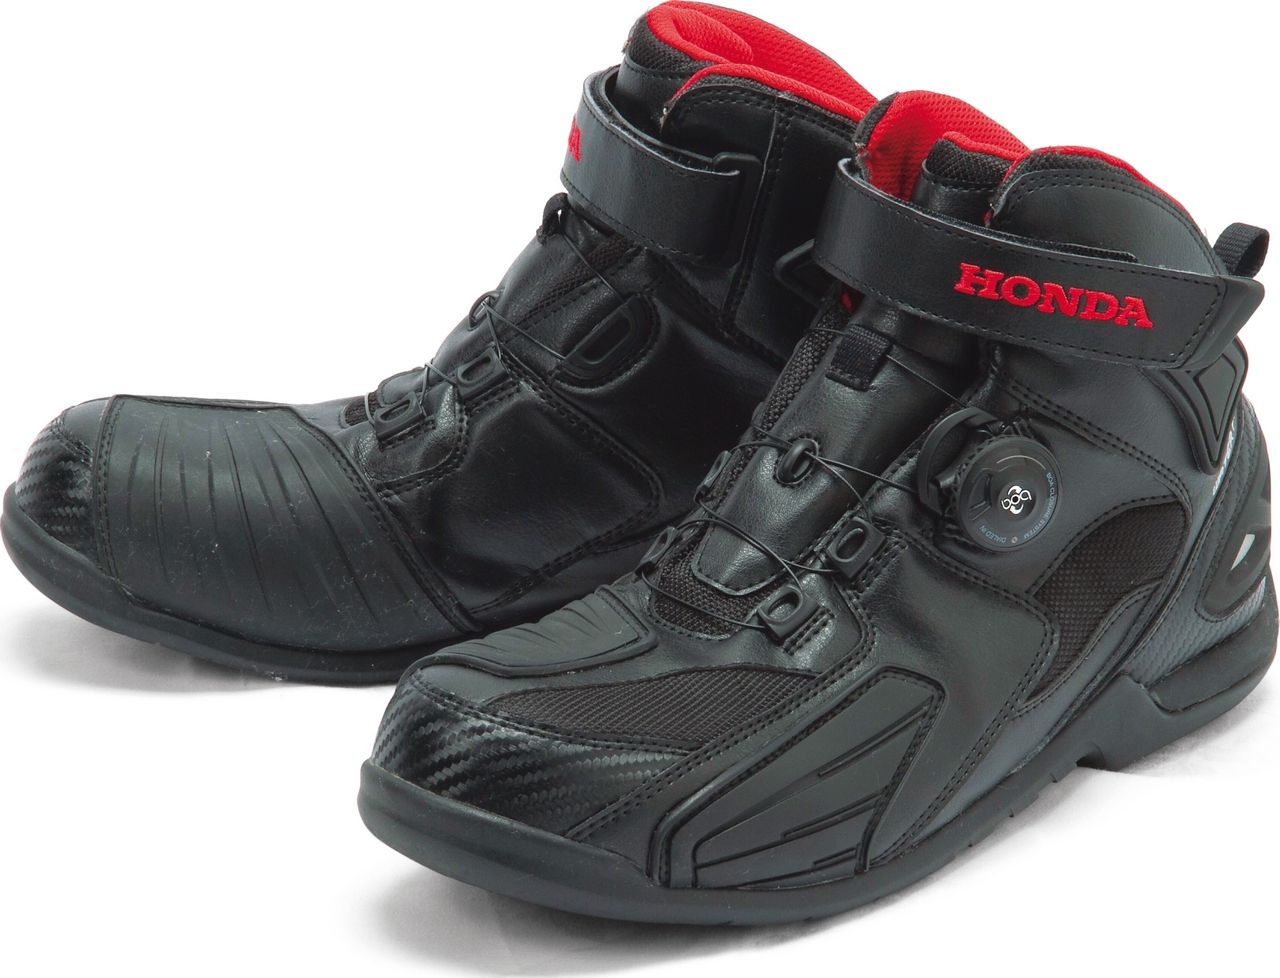 honda motorcycle shoes